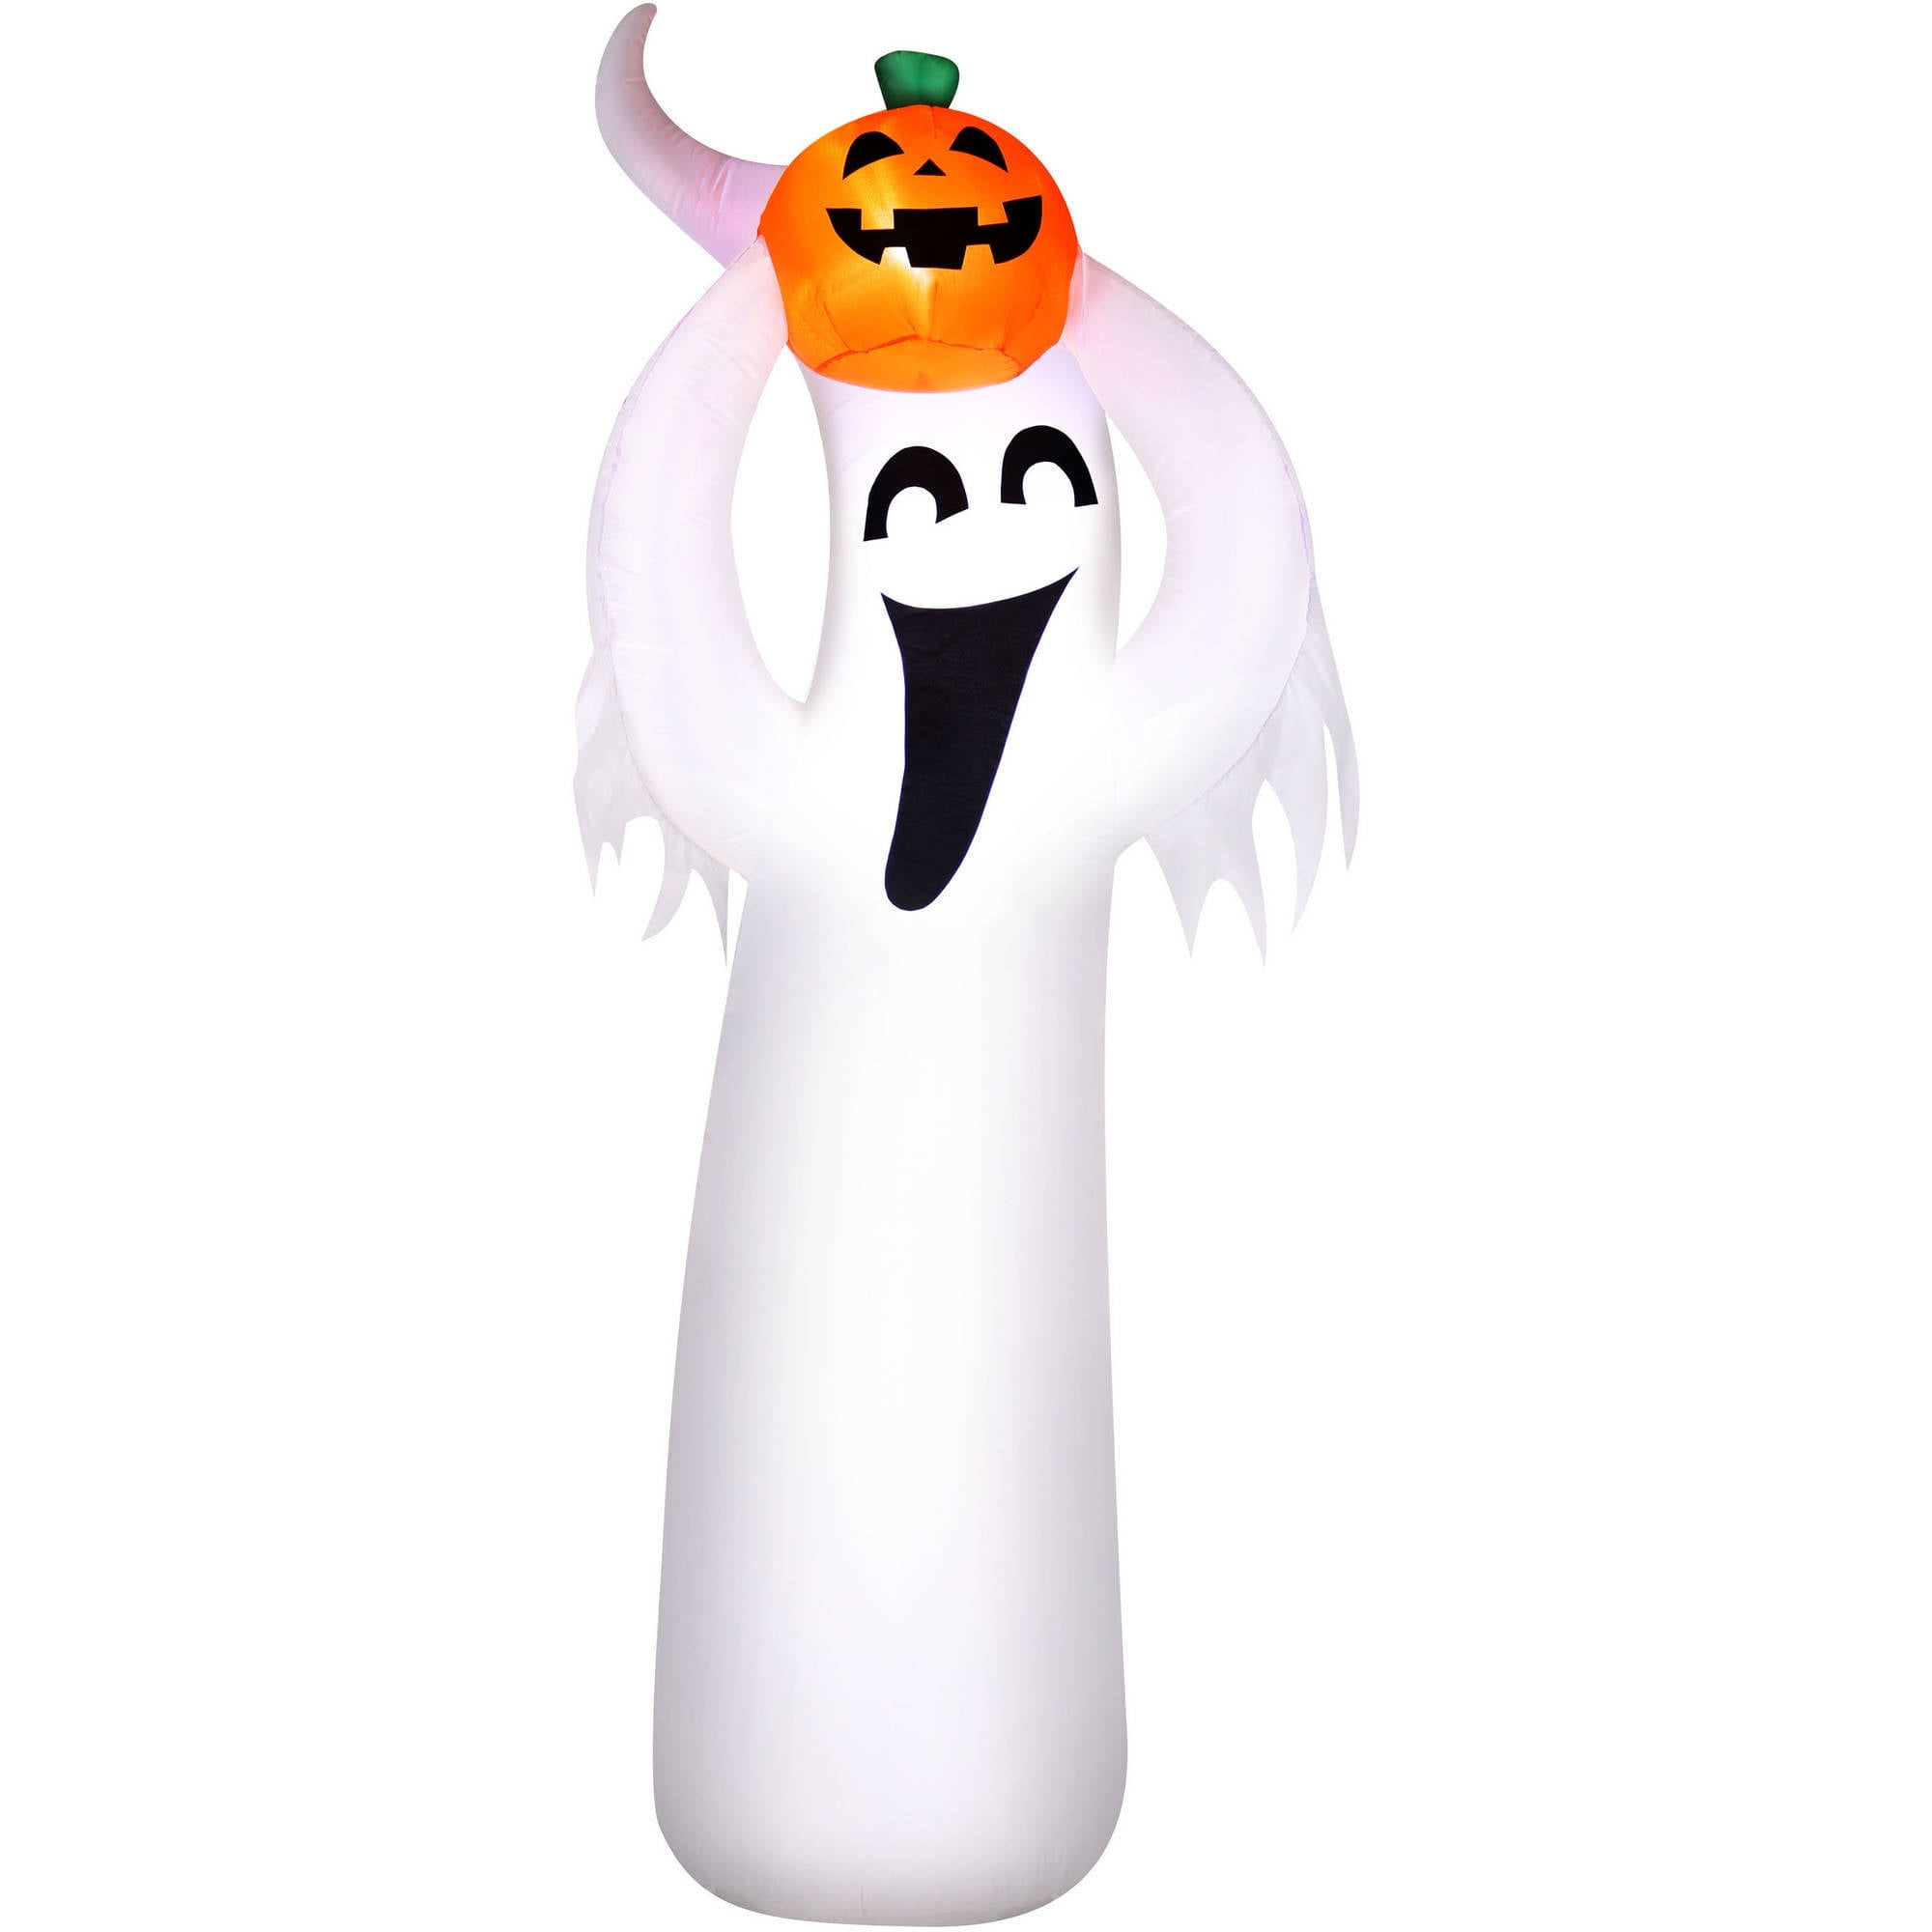 7' Inflatable Ghost and Pumpkin - Walmart.com